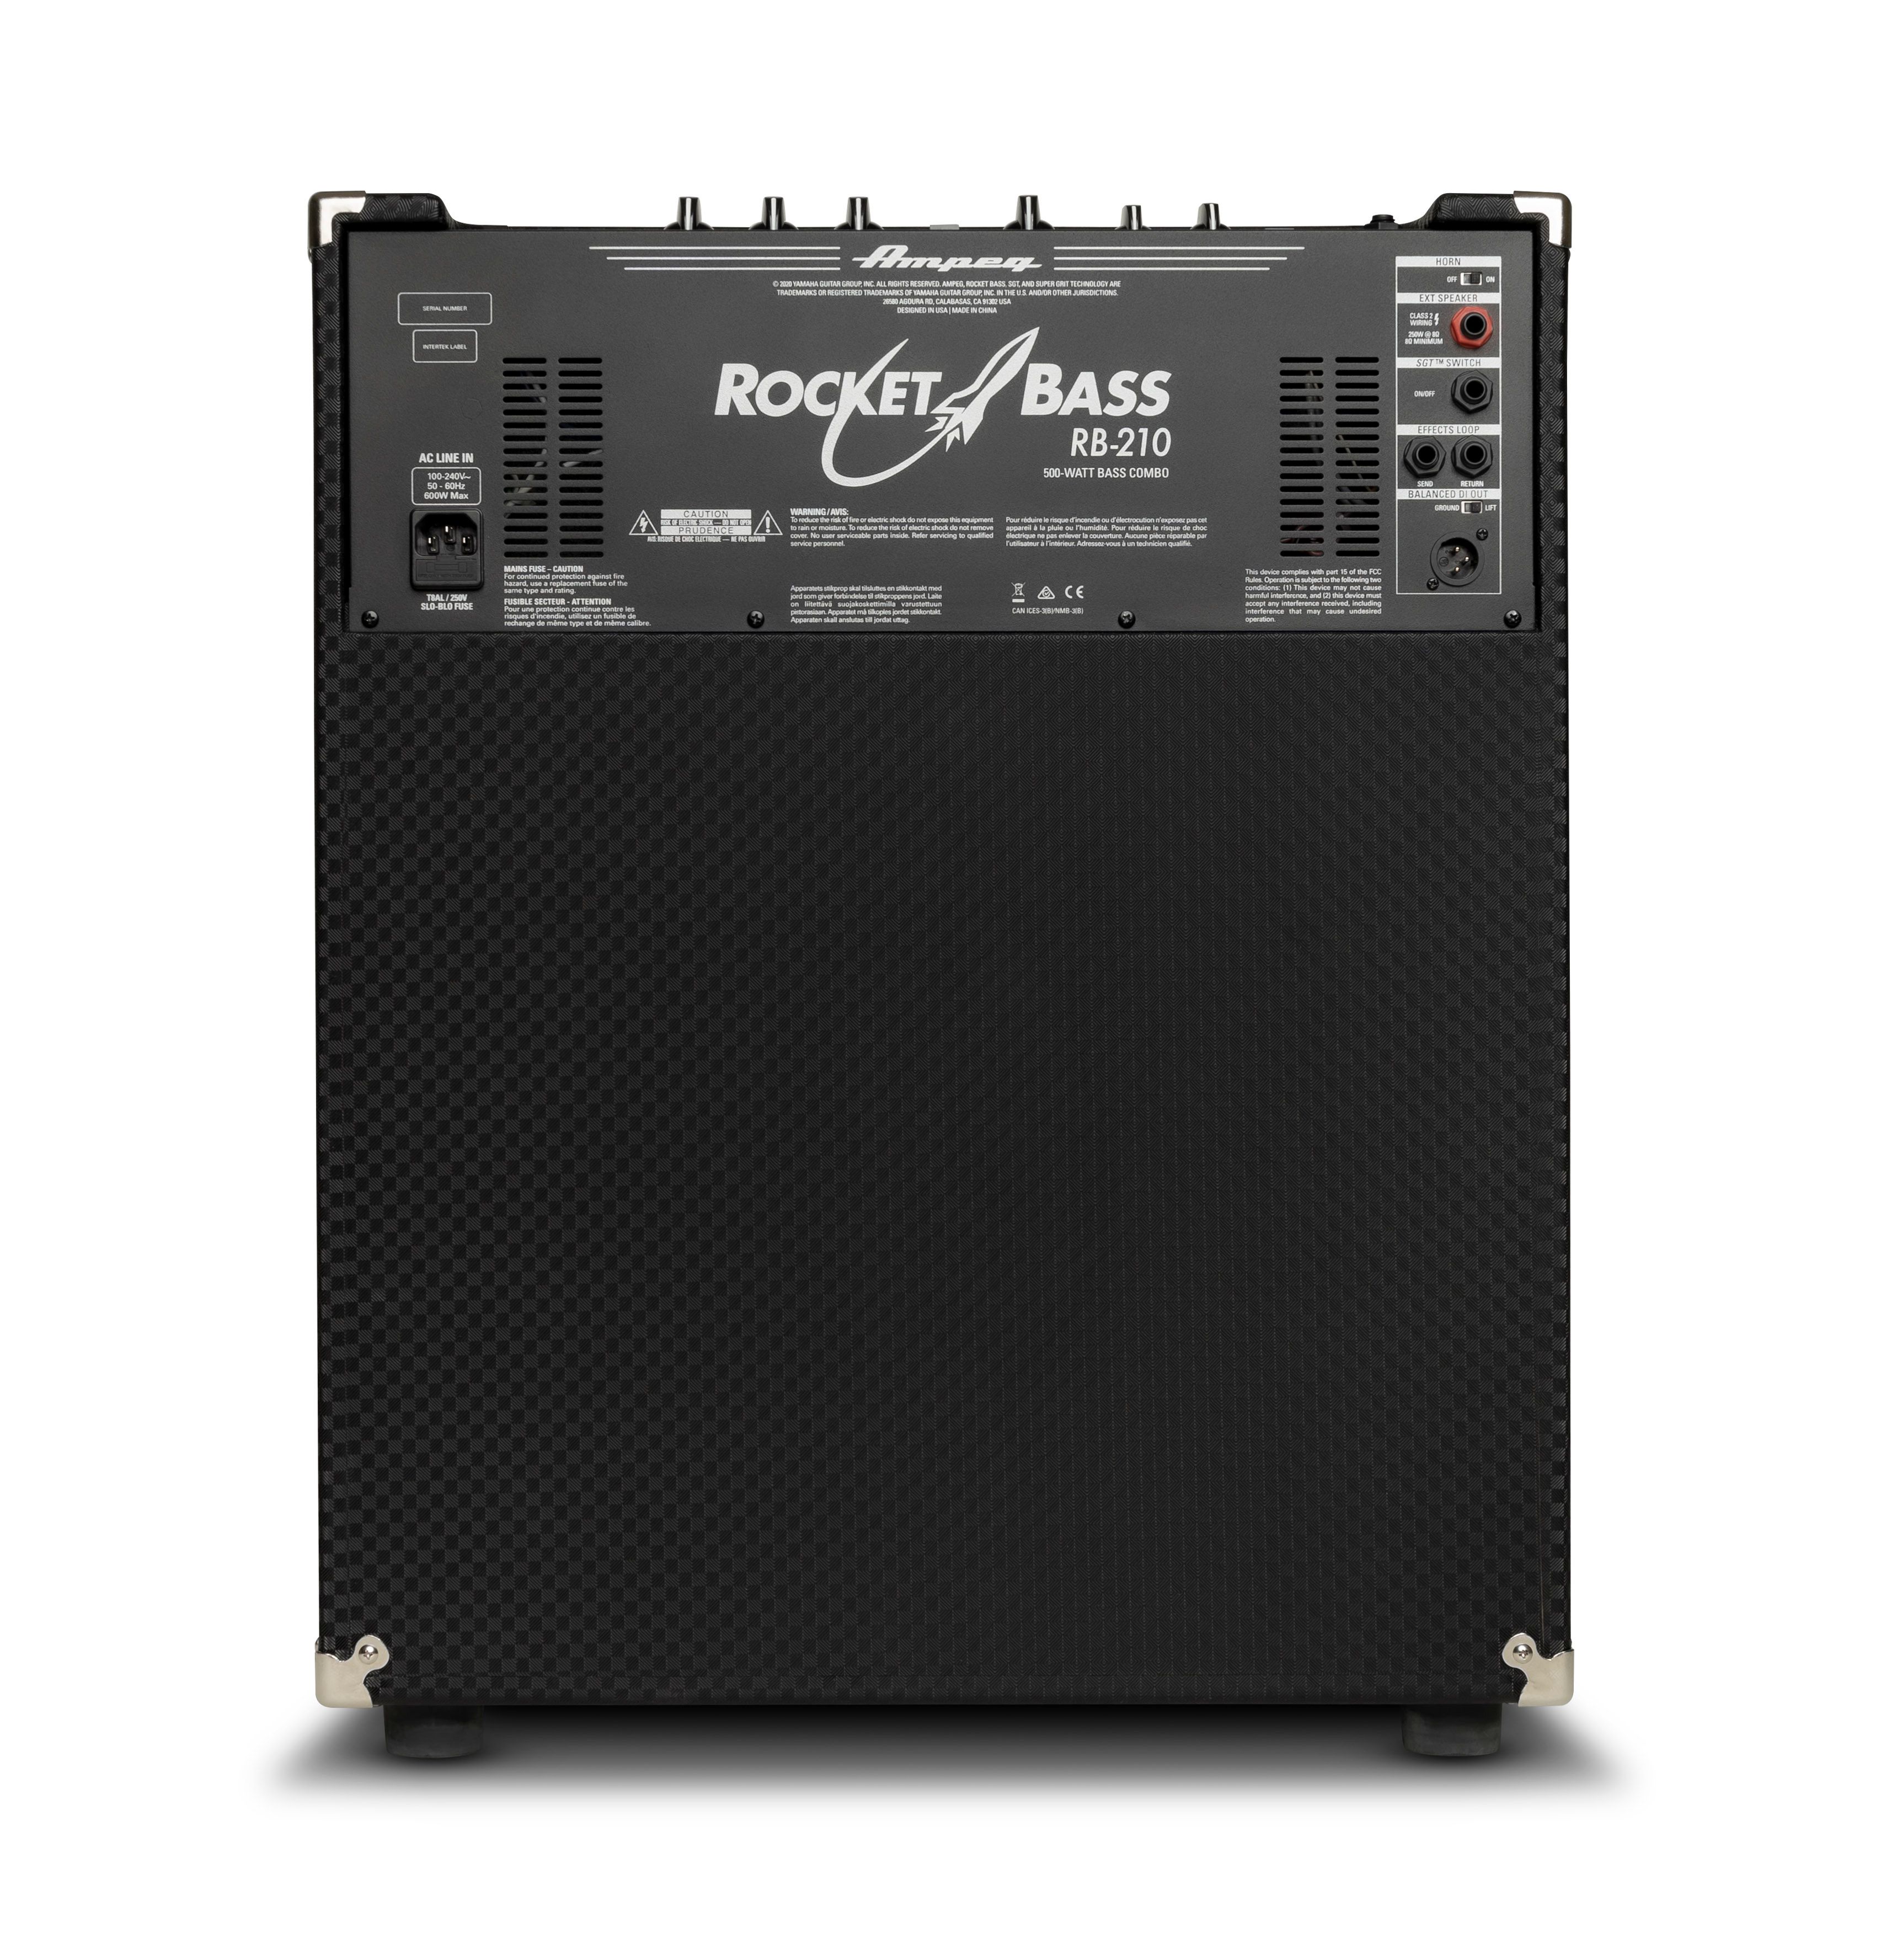 Ampeg Rocket Bass Combo 500w 2x10 - Combo amplificador para bajo - Variation 1